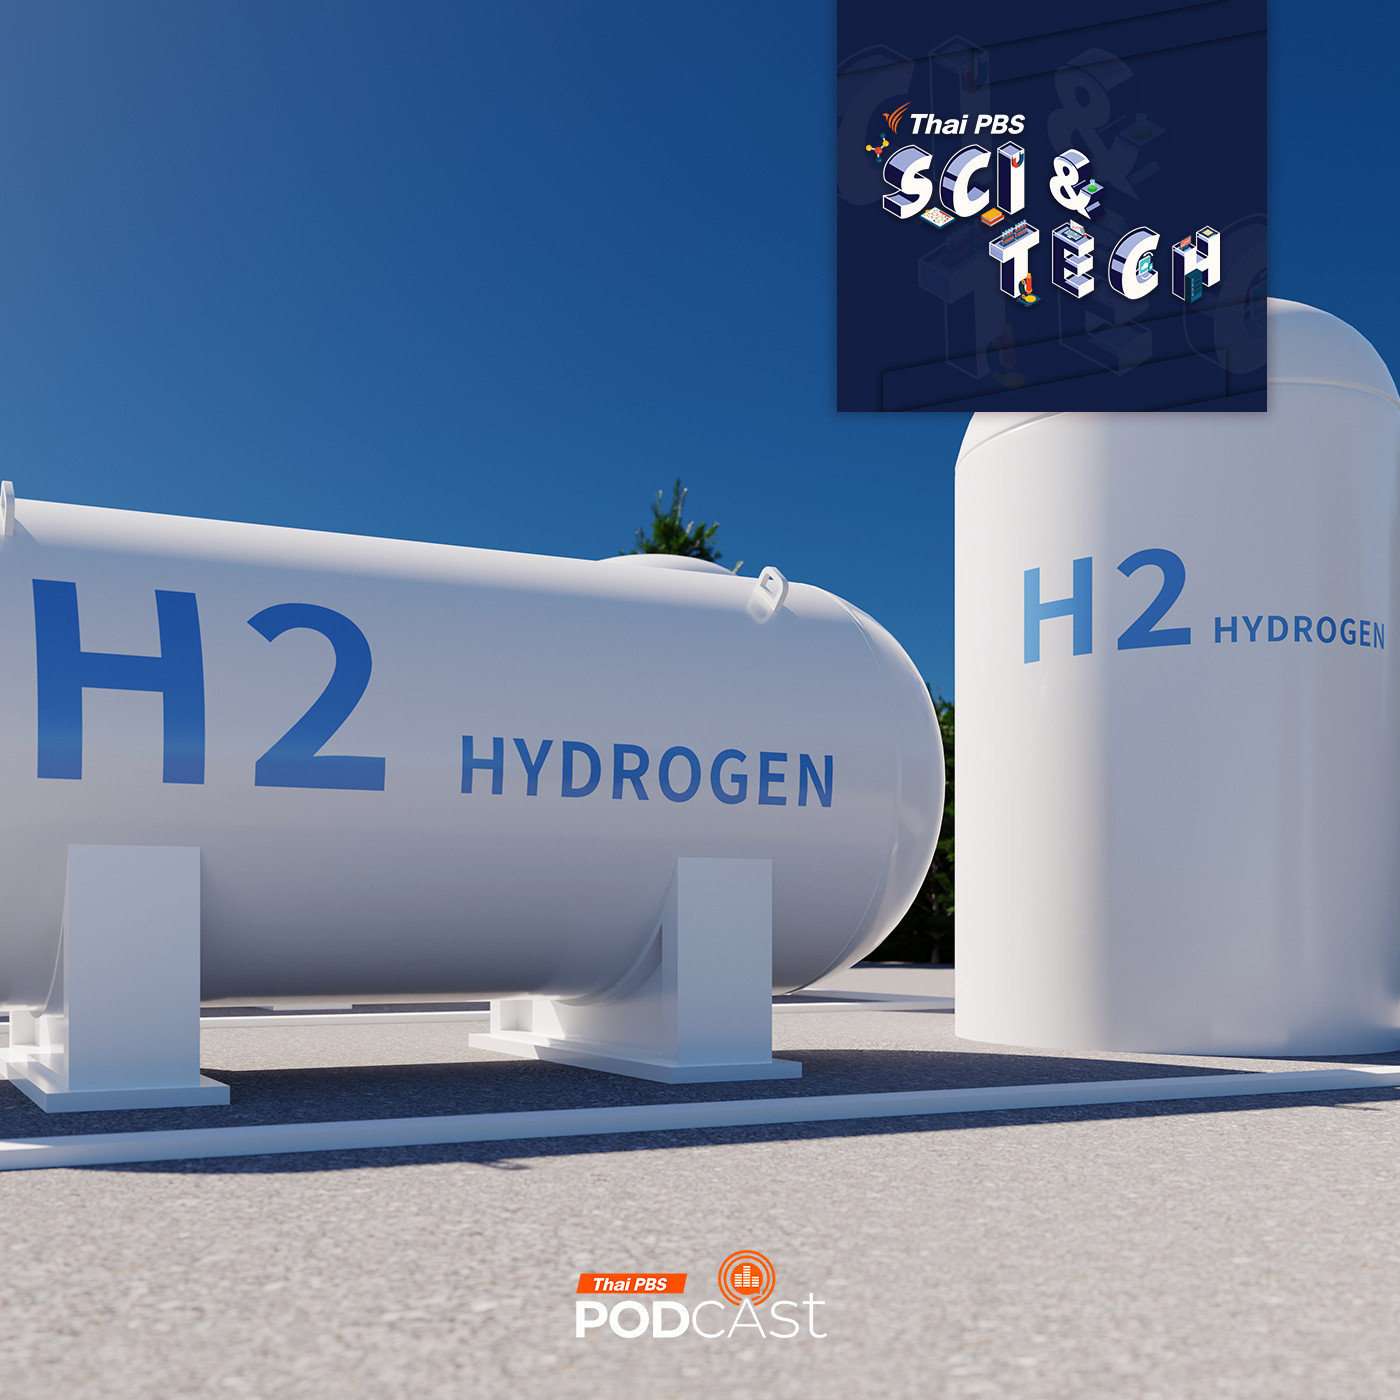 Sci & Tech EP. 797: ”ไฮโดรเจน” พลังงานทางเลือกใหม่ที่จะช่วยลดการปล่อยมลพิษและ�